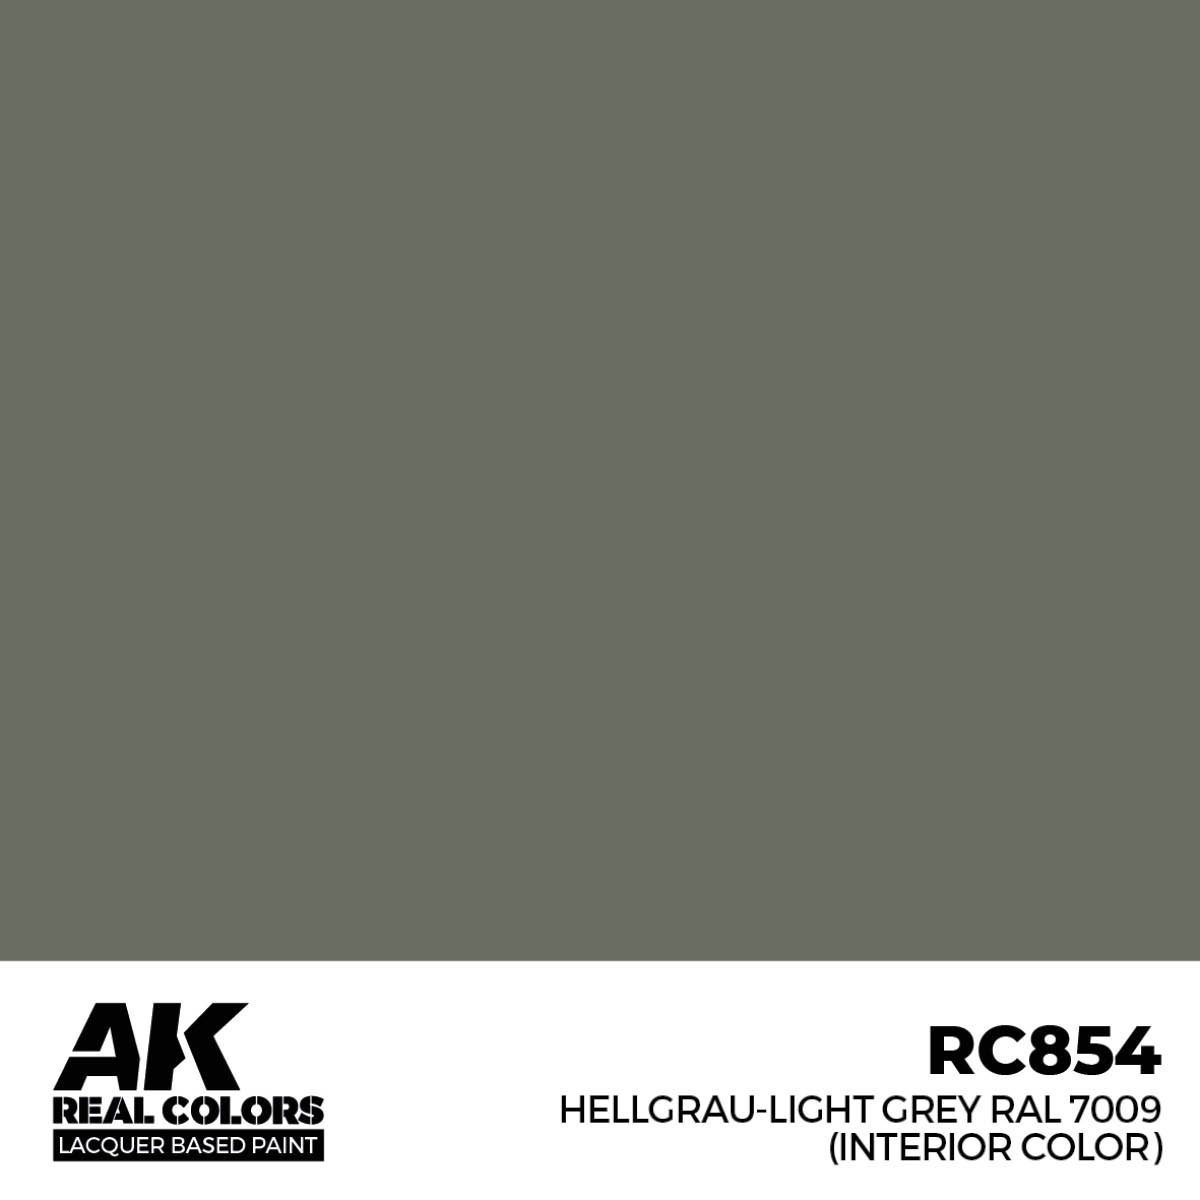 Hellgrau-Light Grey RAL 7009 (Interior Color)